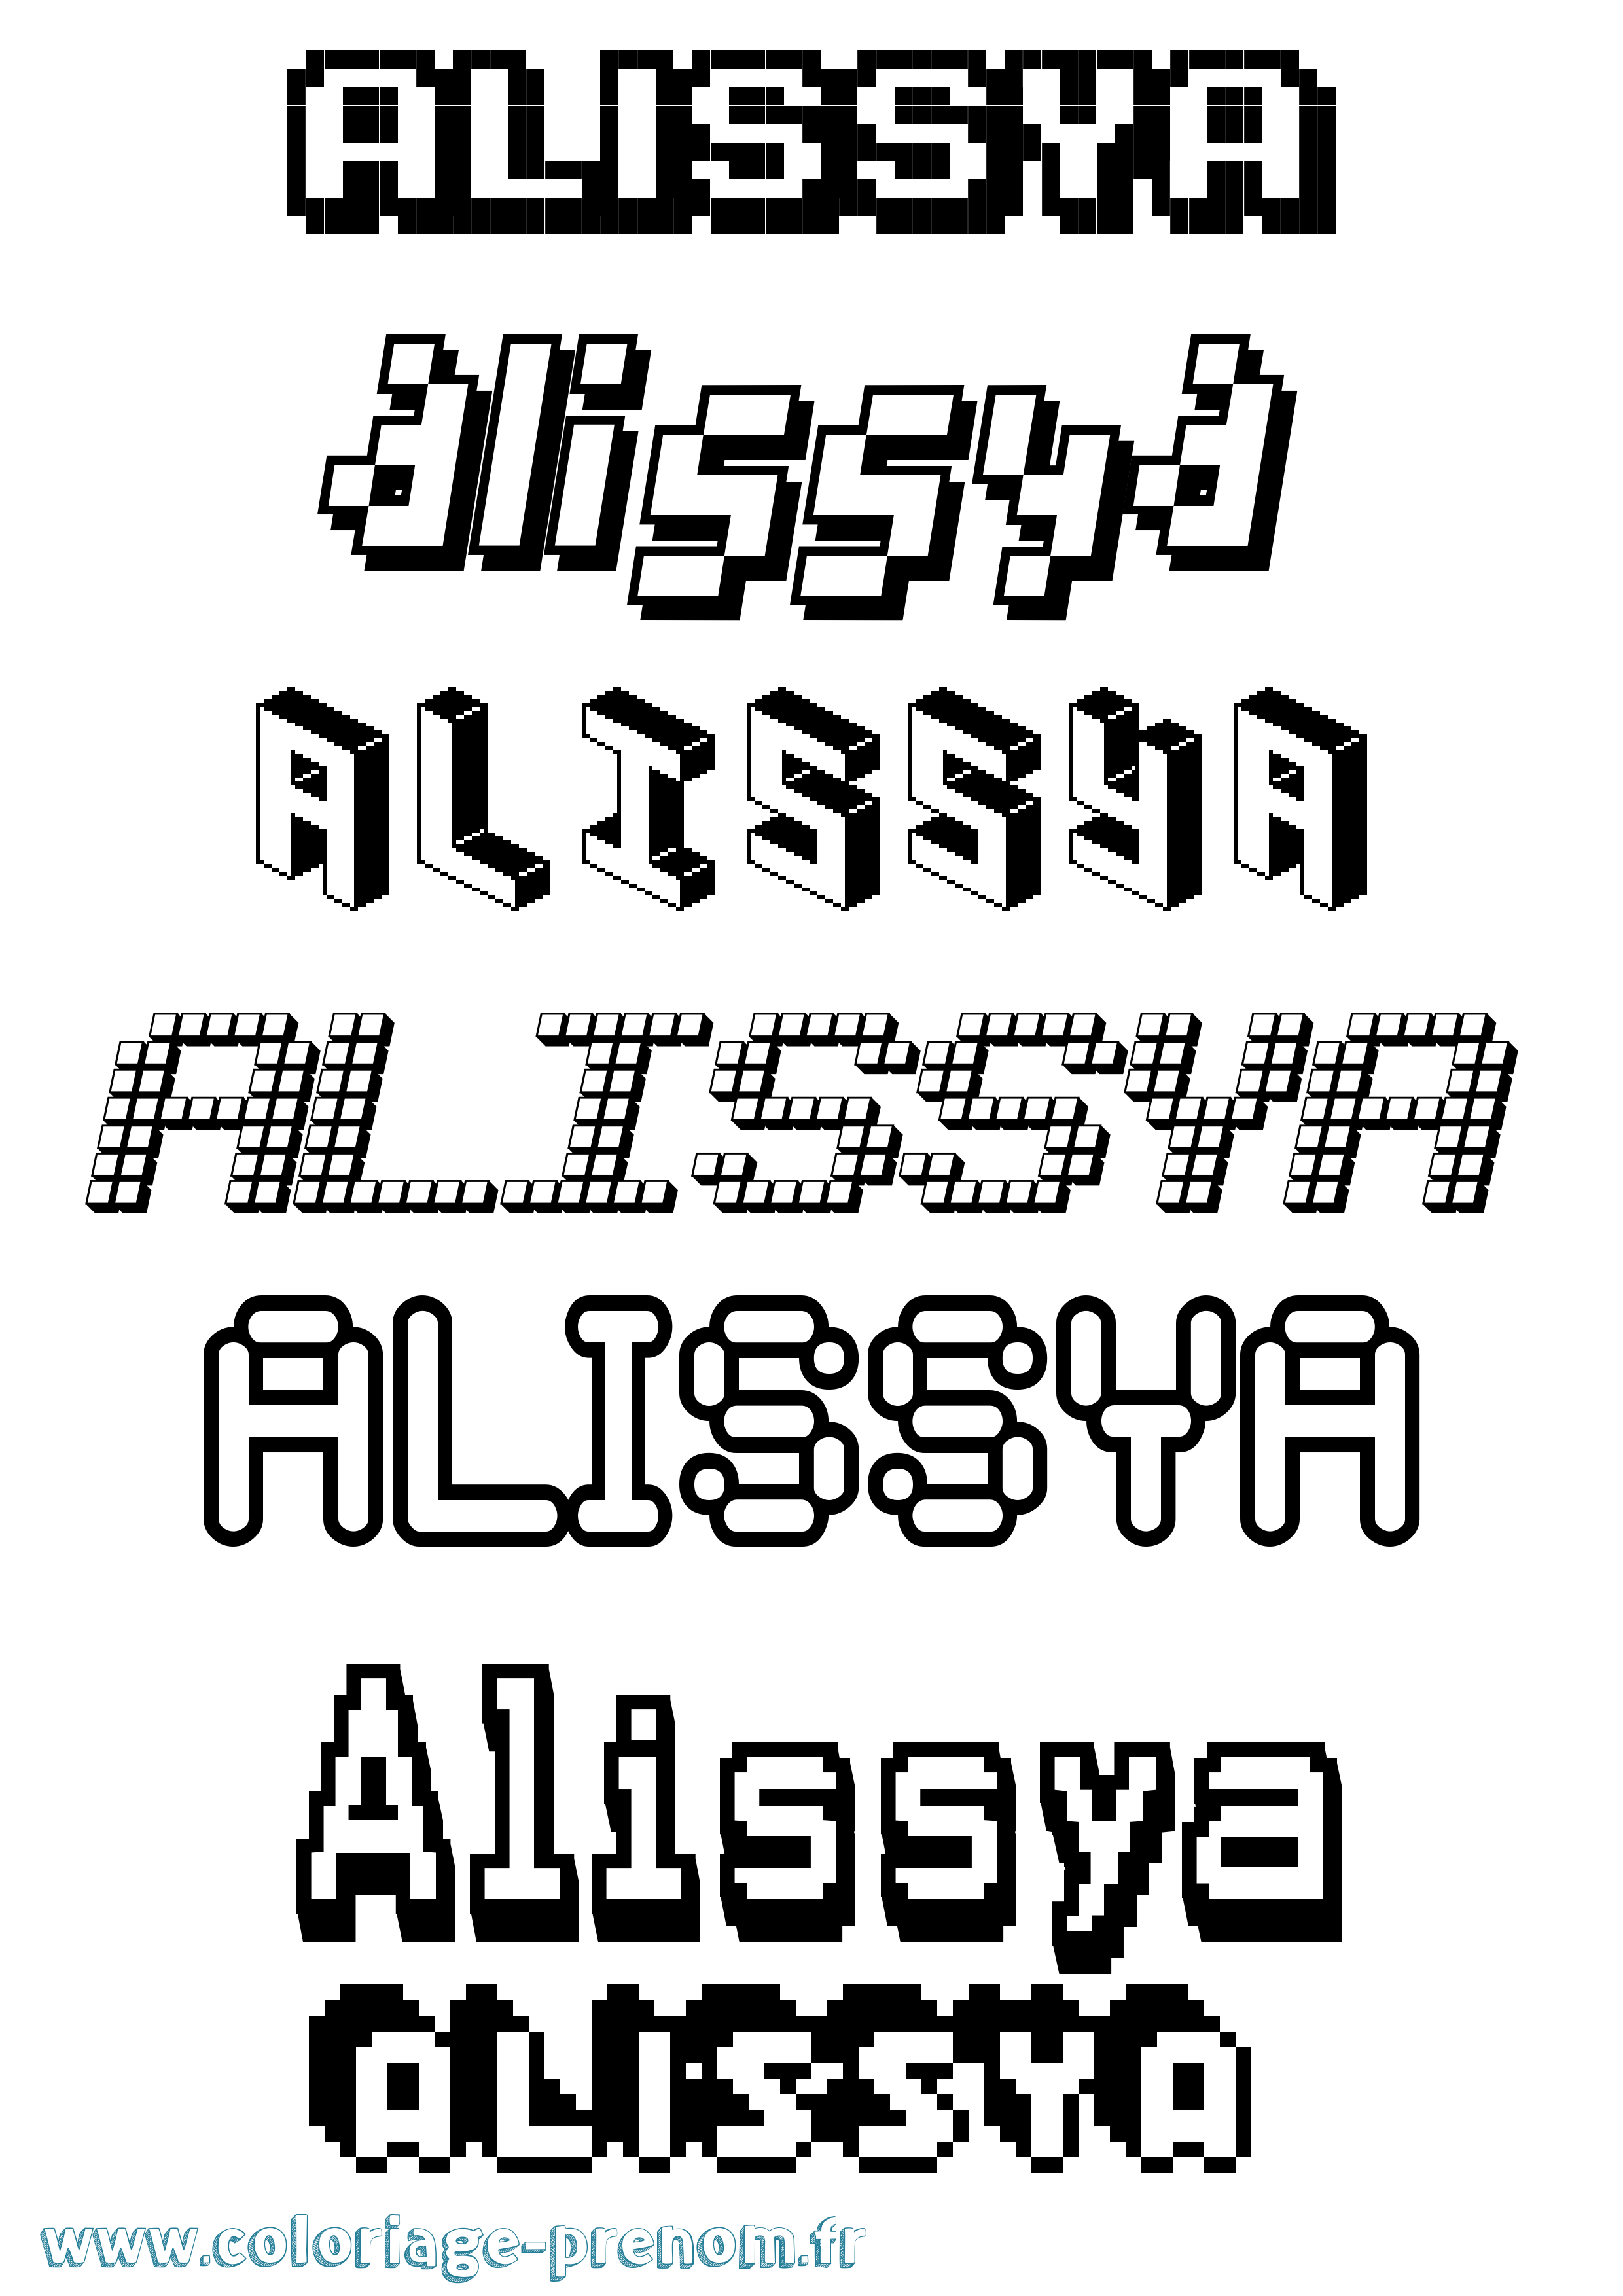 Coloriage prénom Alissya Pixel